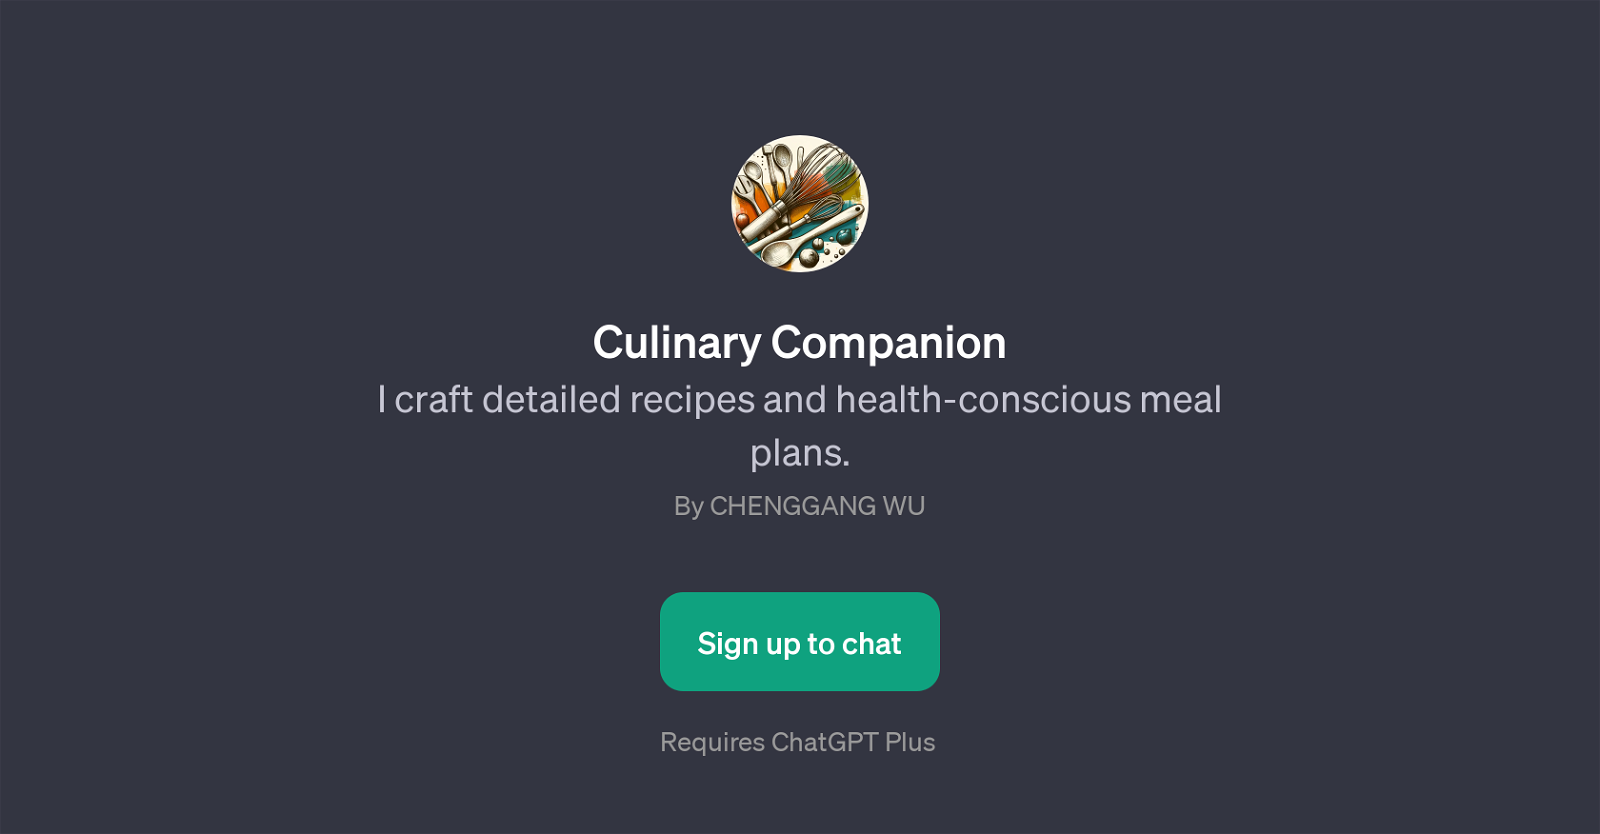 Culinary Companion website